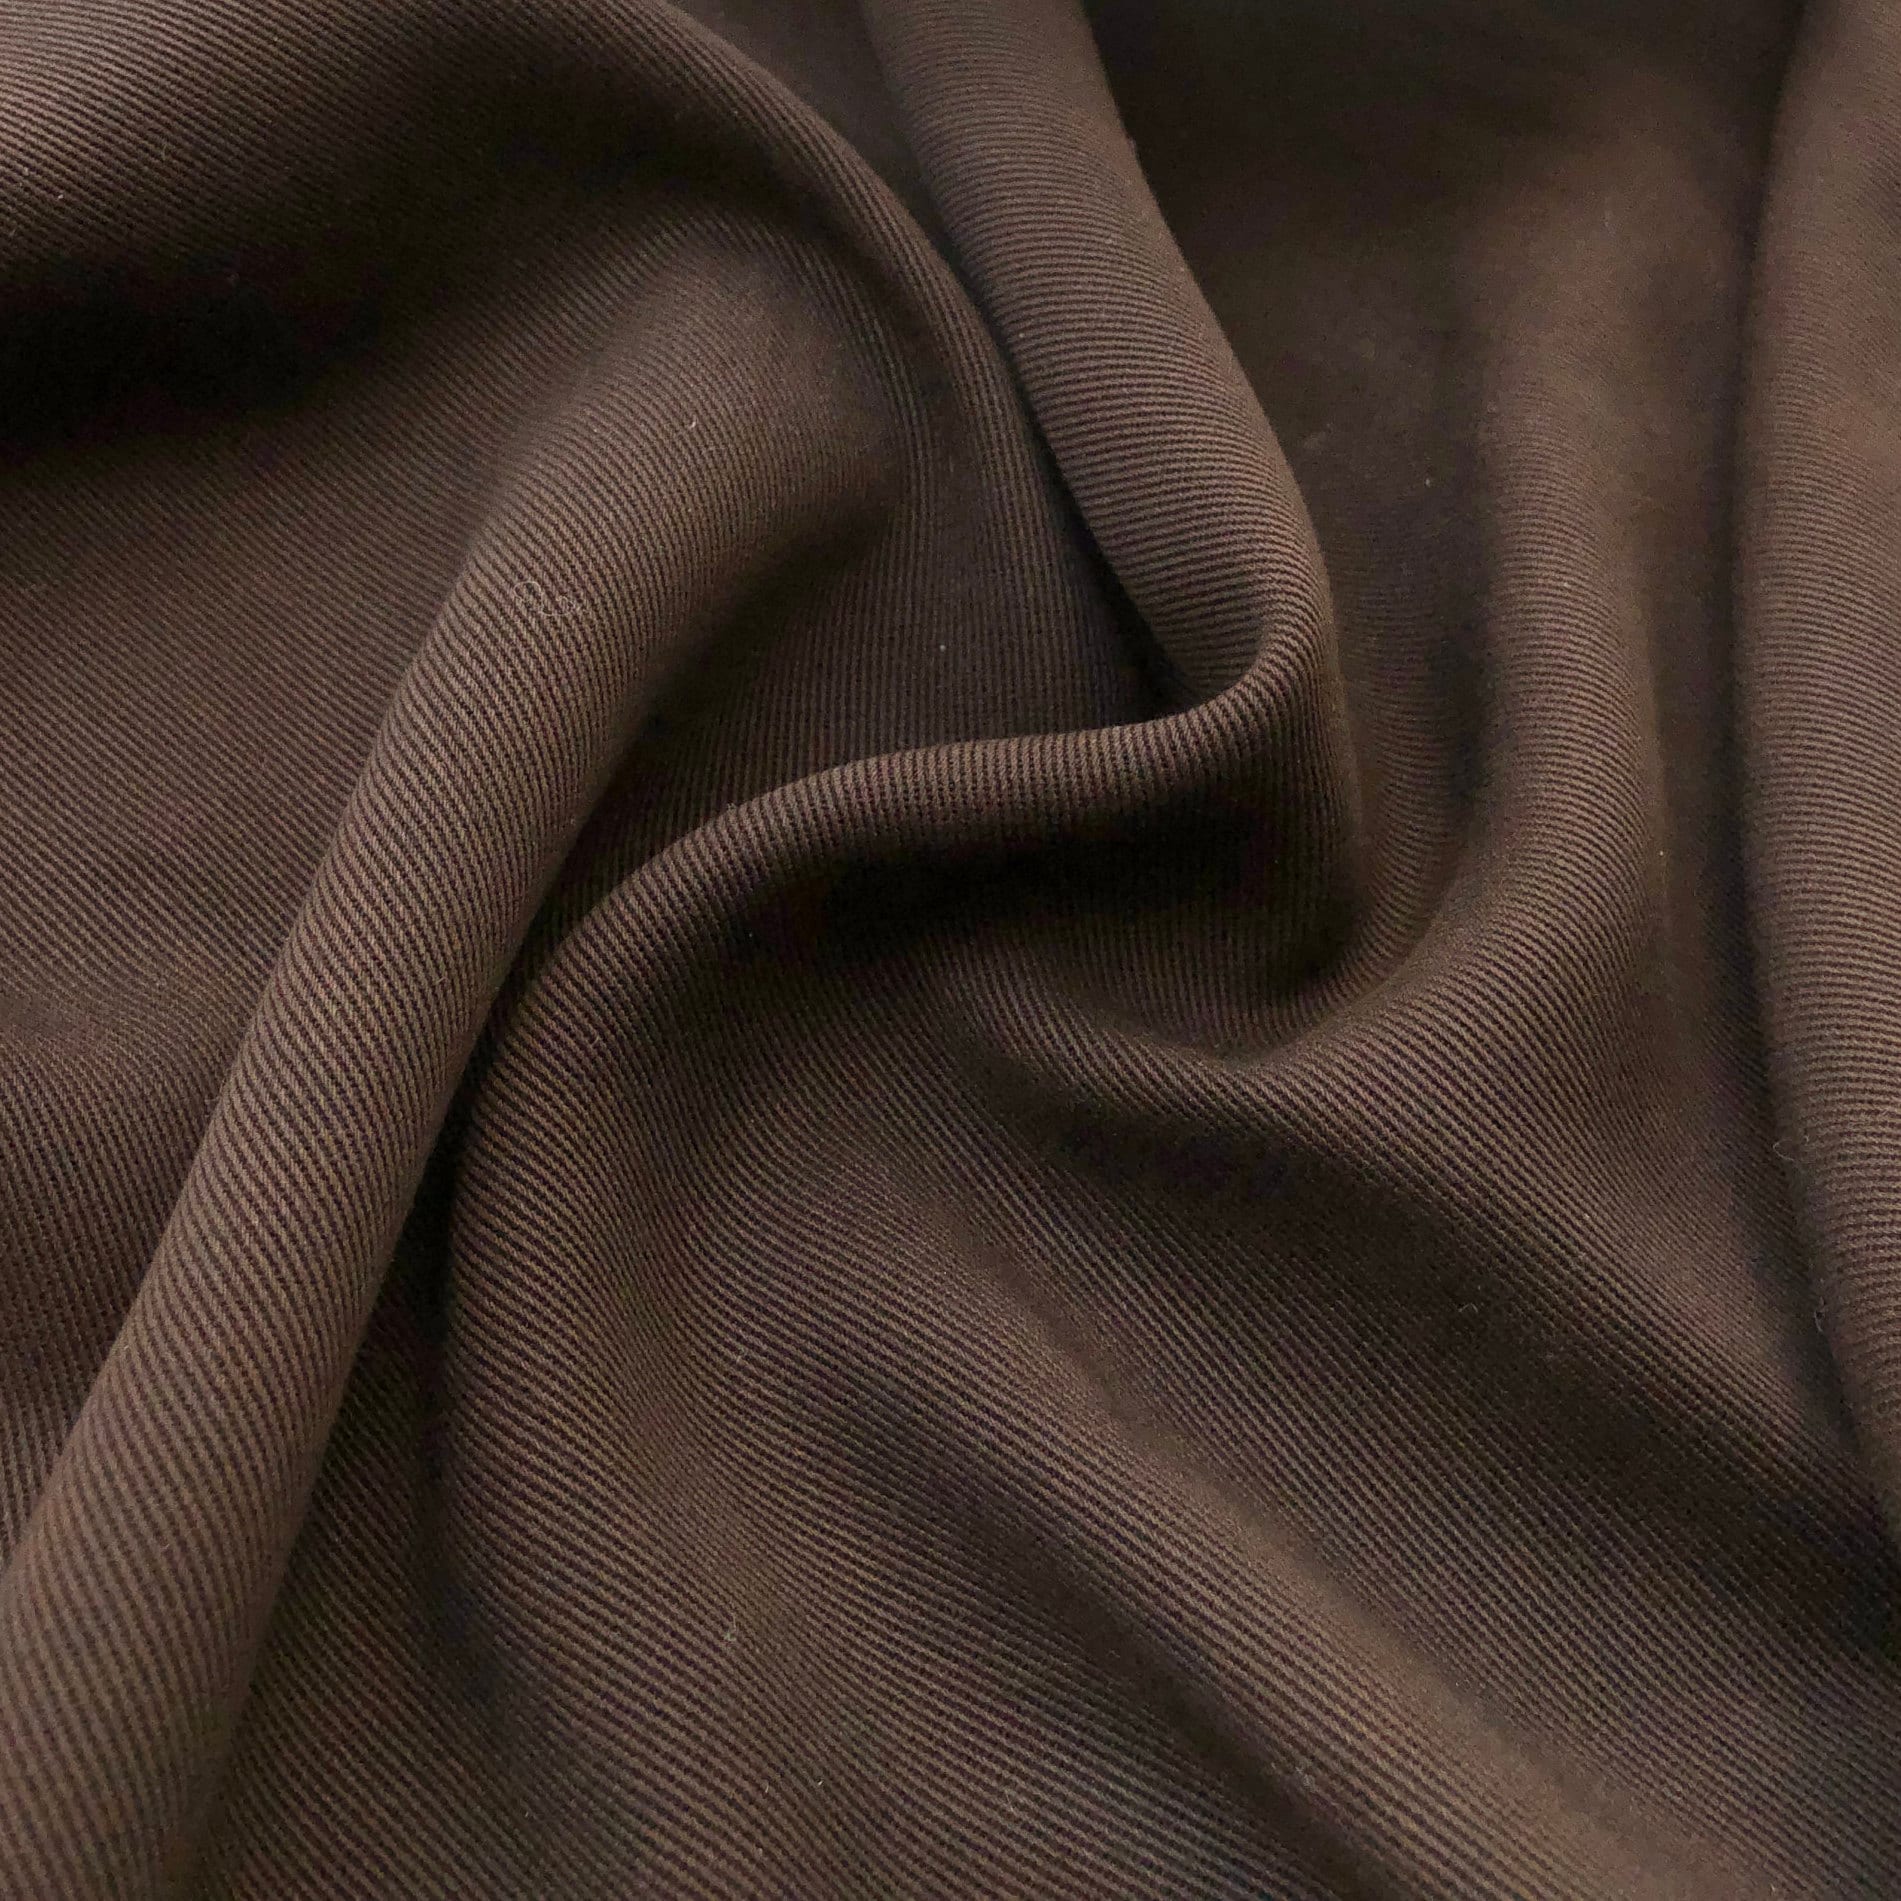 Buy Zainab CREATIOND Denim Tunic Brown Dress for Girls & Woman/Denim Dress  Cotton/Denim Fabric (X-Large) at Amazon.in